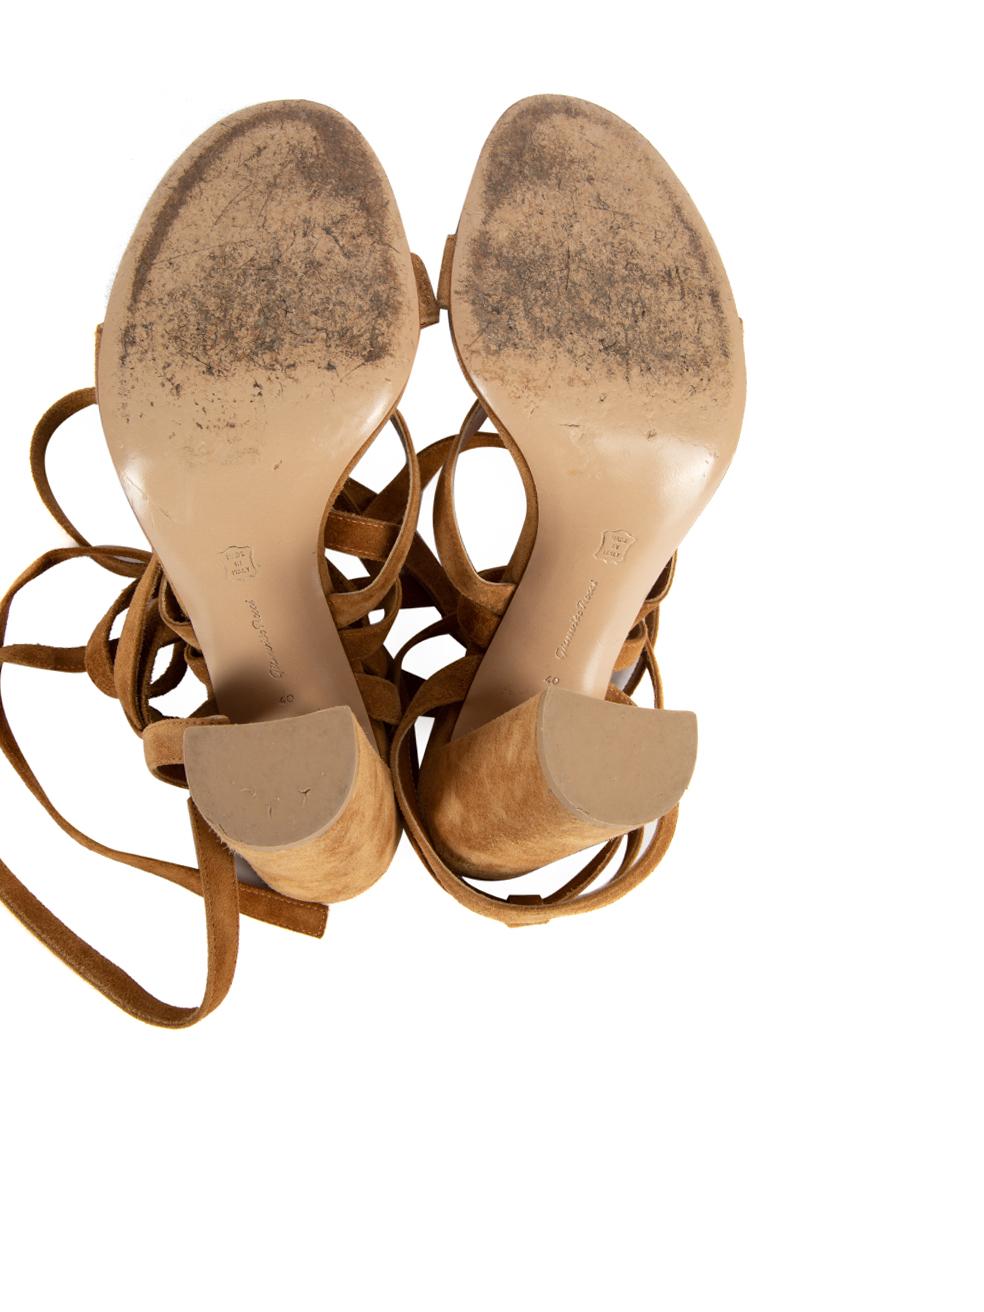 Pre-Loved Gianvito Rossi Women's Camel Suede Strappy Block Heel Sandals 2